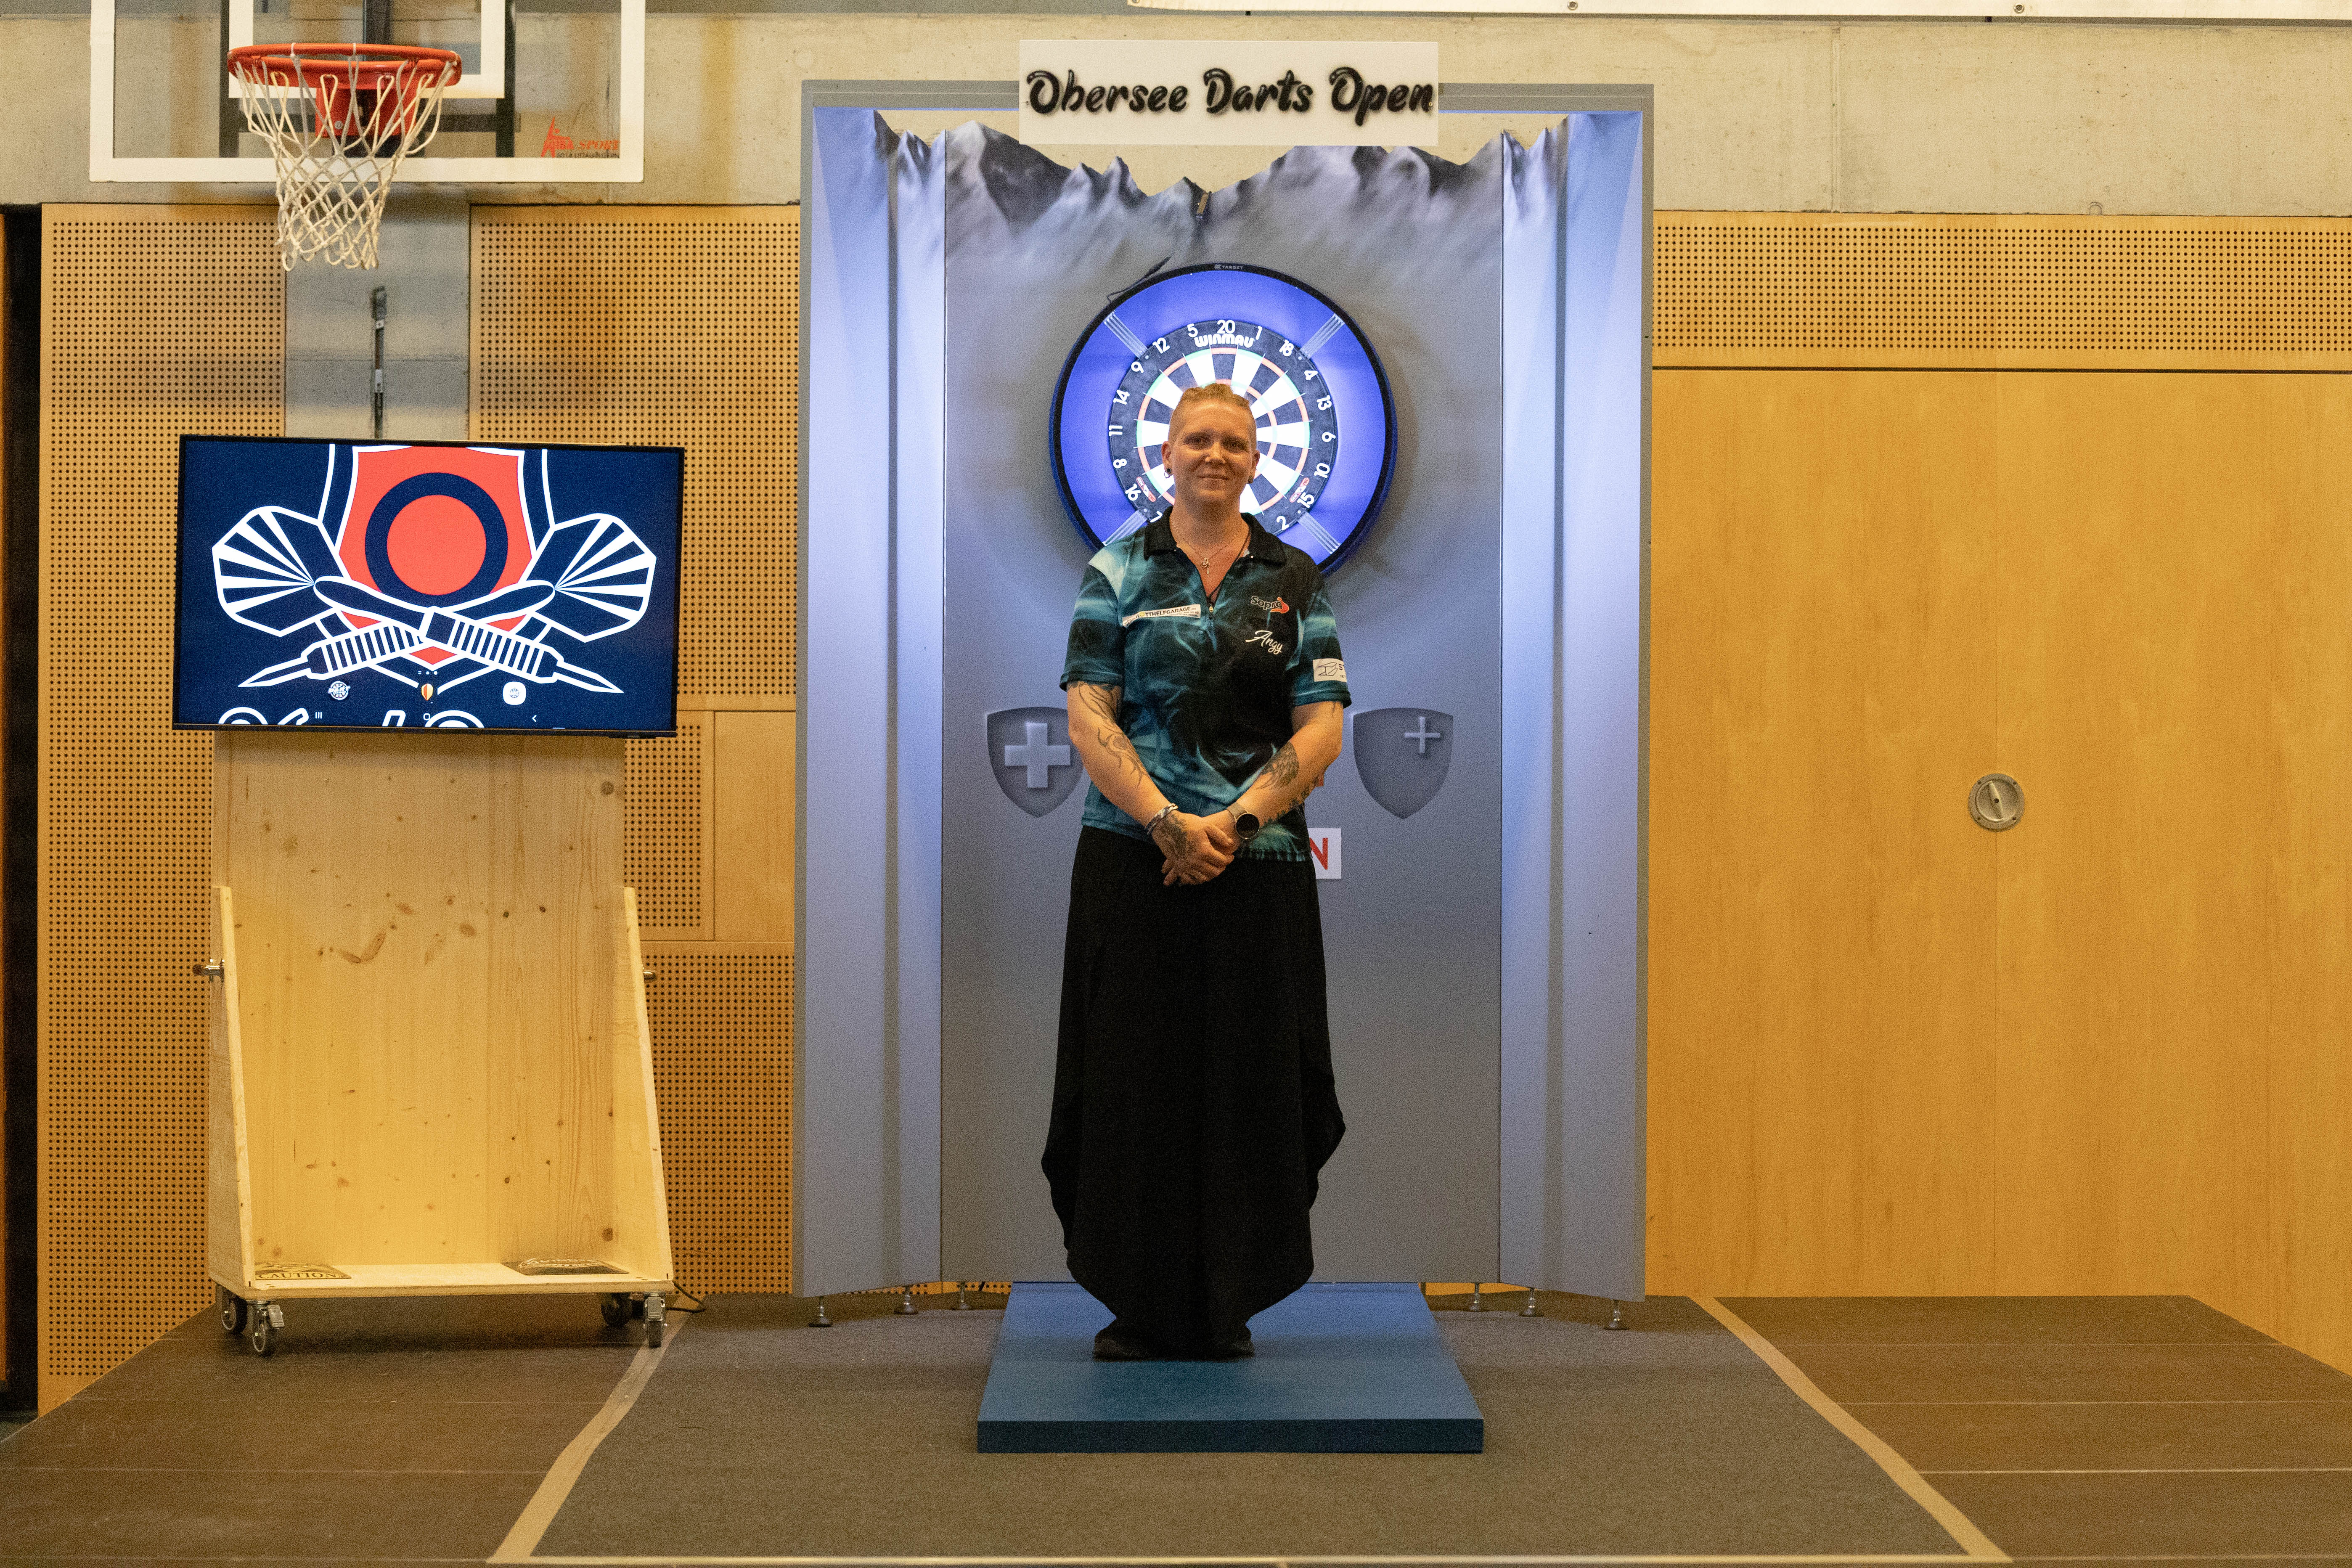 Obersee Darts Open 2023 - Vainqueur Simples Dames : Angela Heinrich